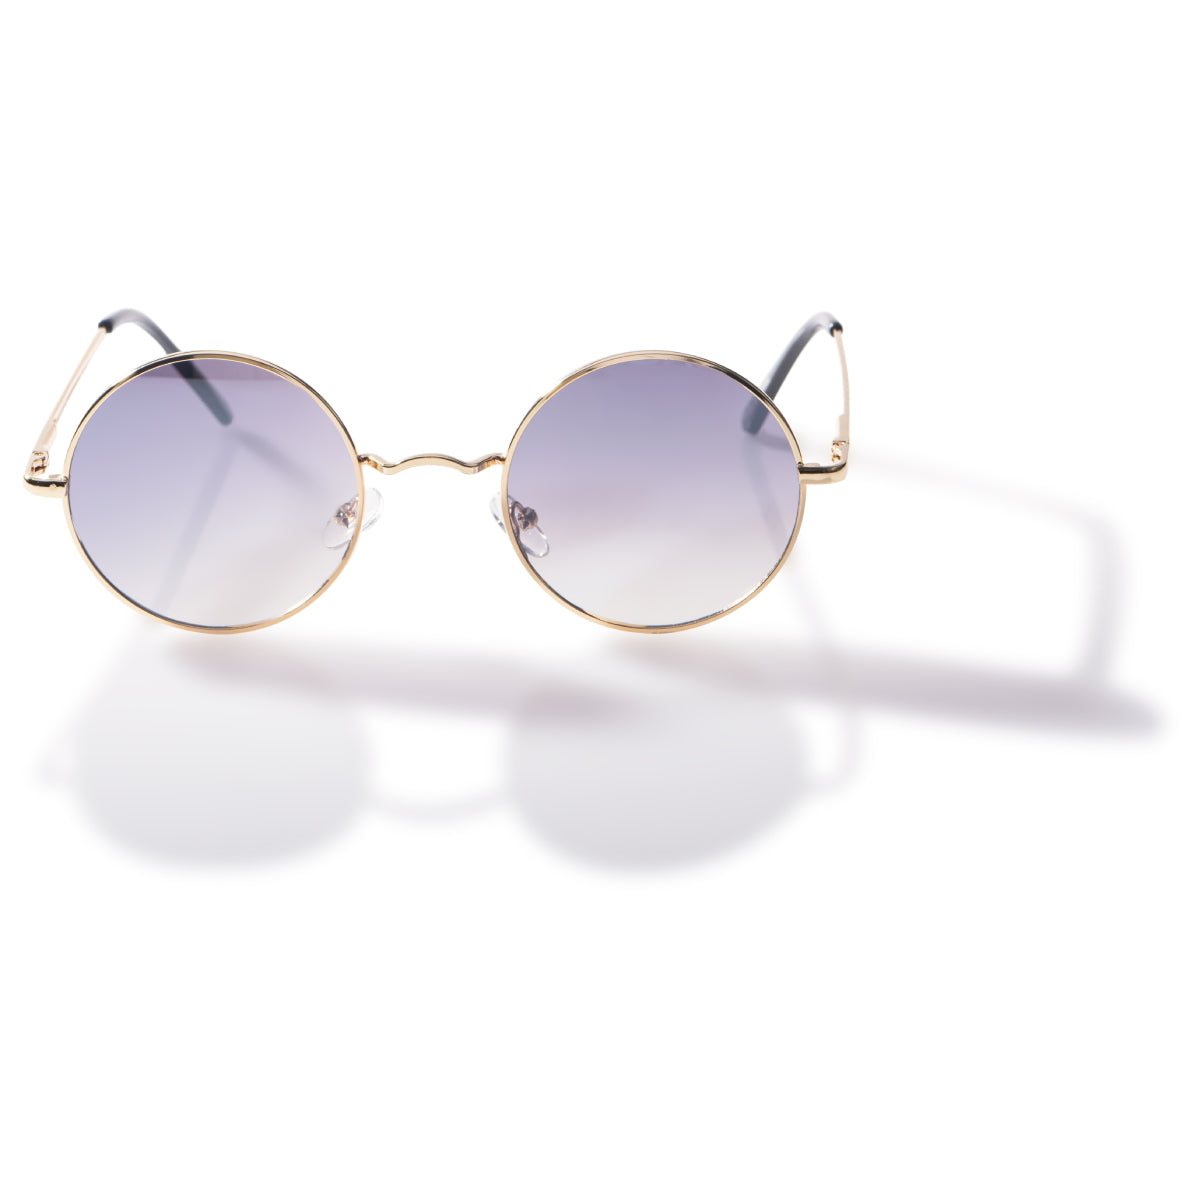 John Lennon Vintage Round Sunglasses Costume Accessory - Mirror